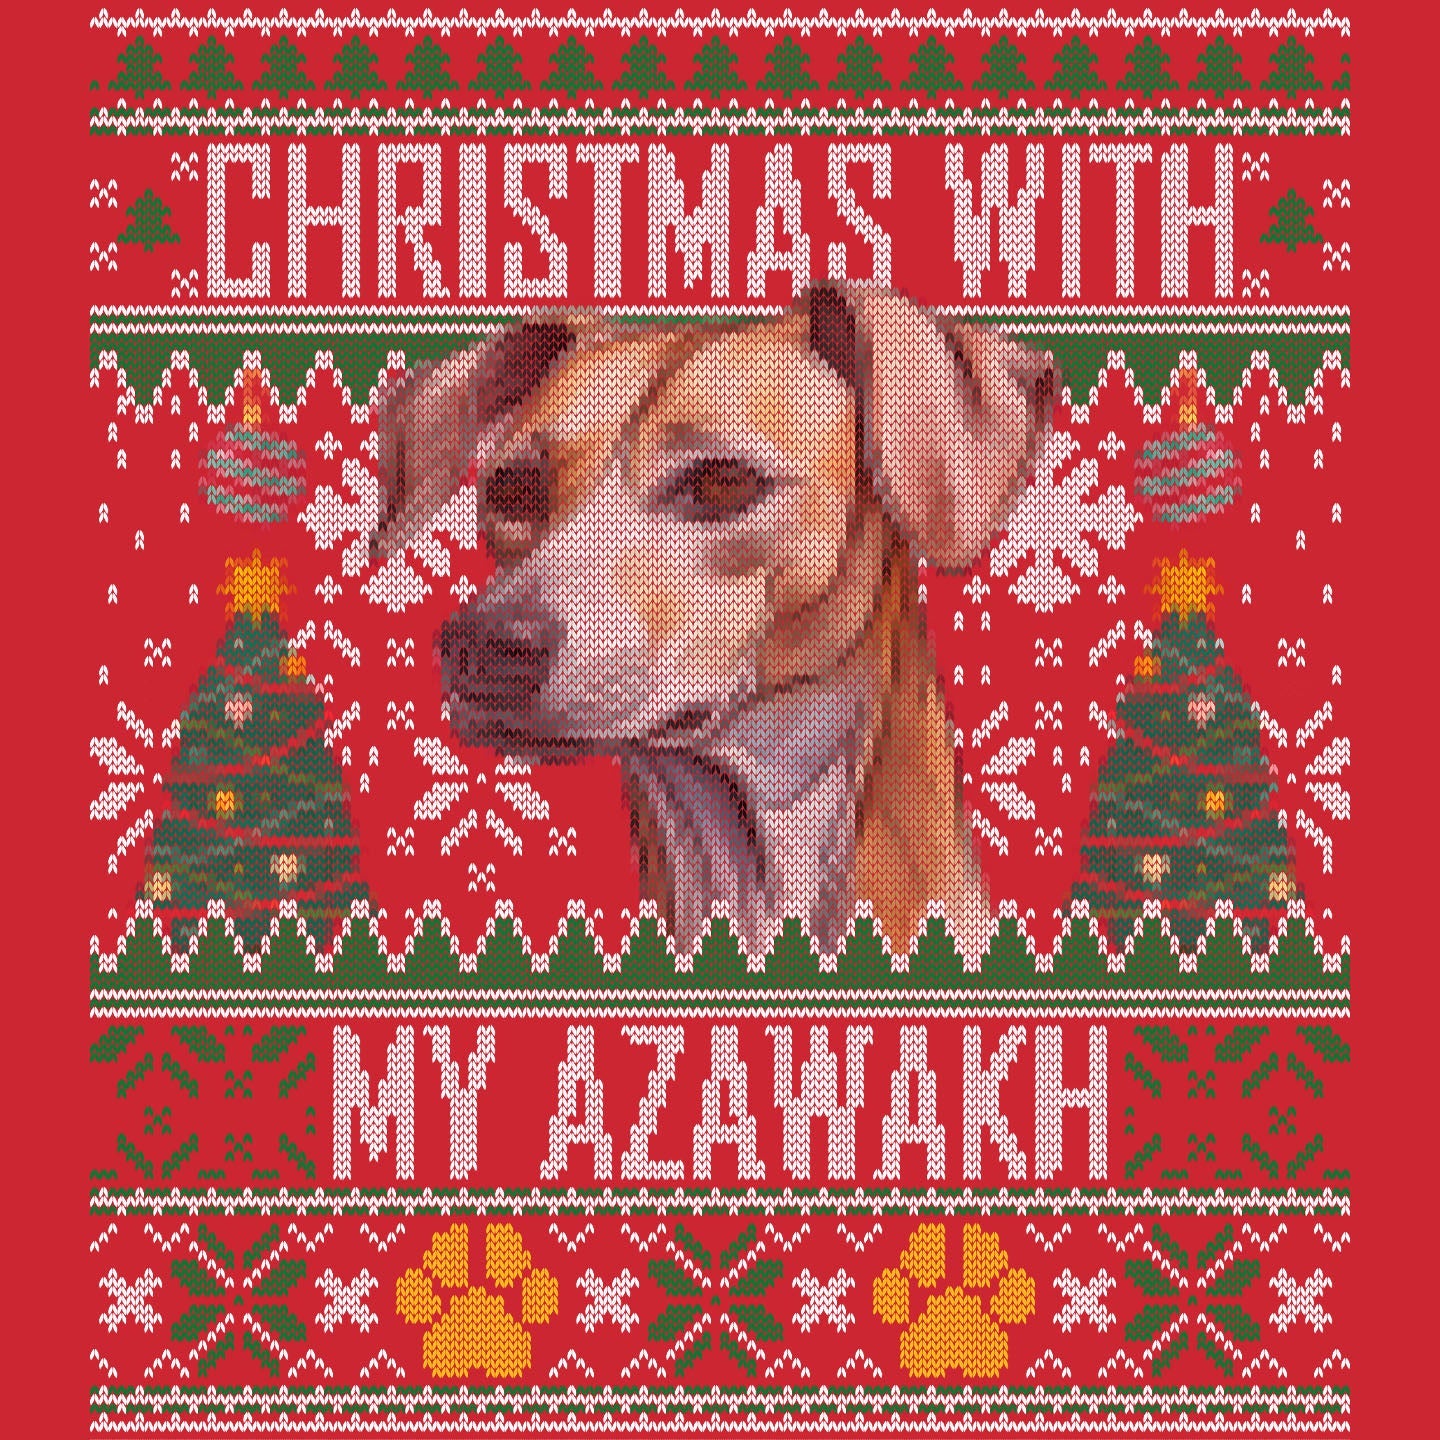 Ugly Sweater Christmas with My Azawakh - Adult Unisex Long Sleeve T-Shirt